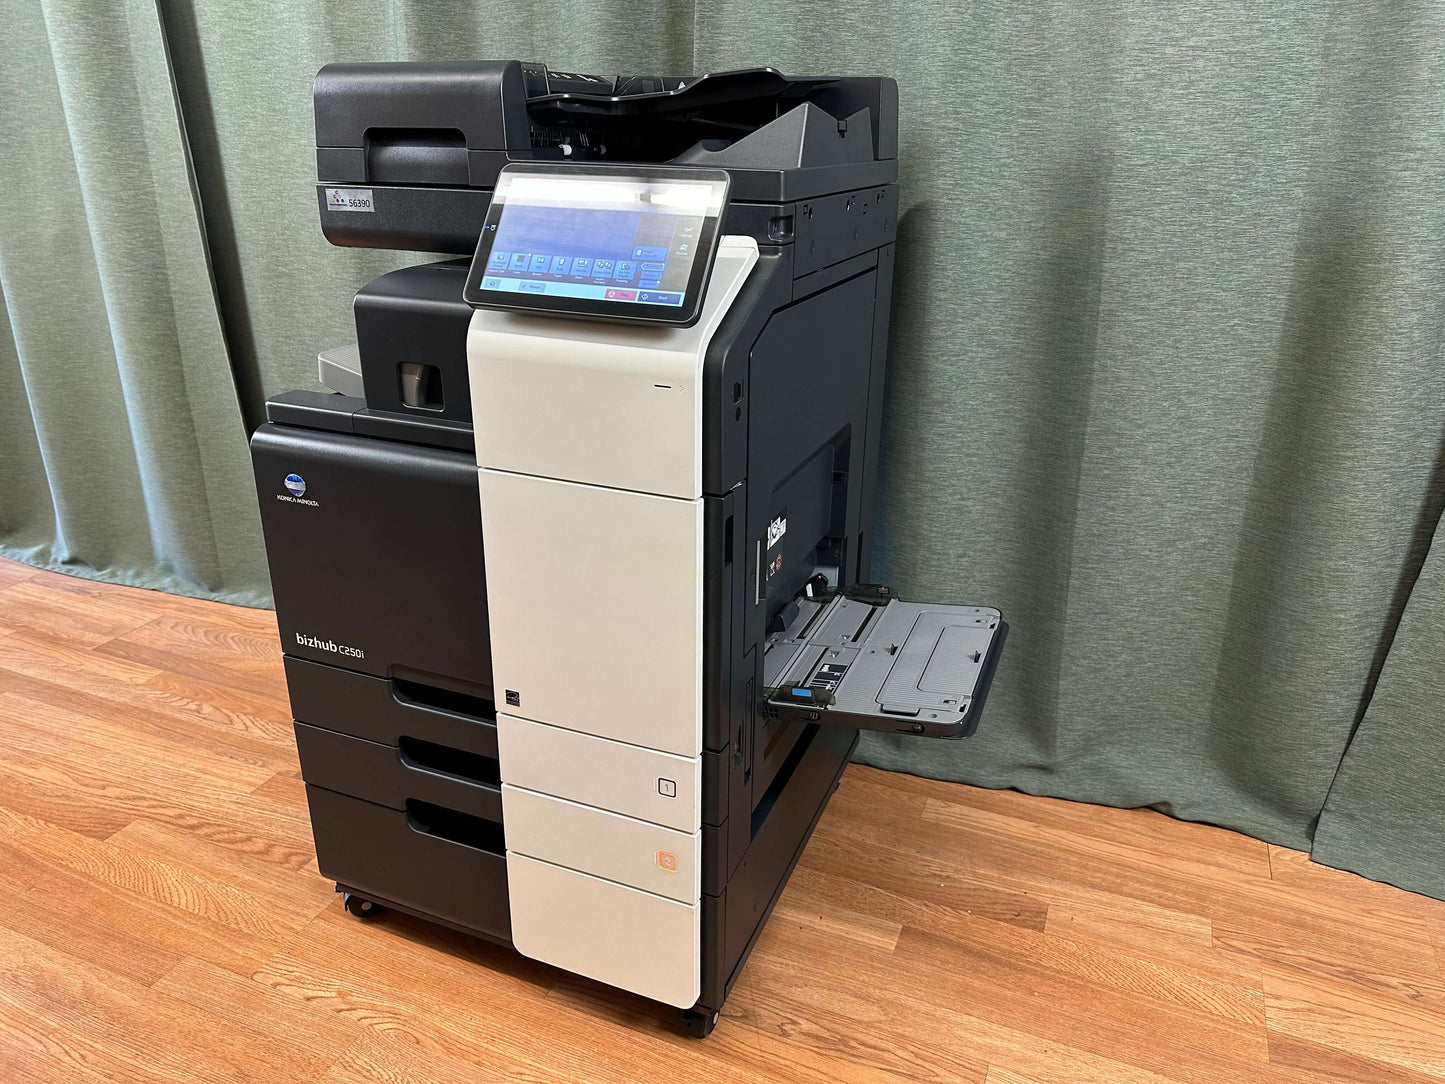 WOW Demo Unit Konica Minolta Bizhub C250i Color Copier Printer Scan Low 7.5k Usage